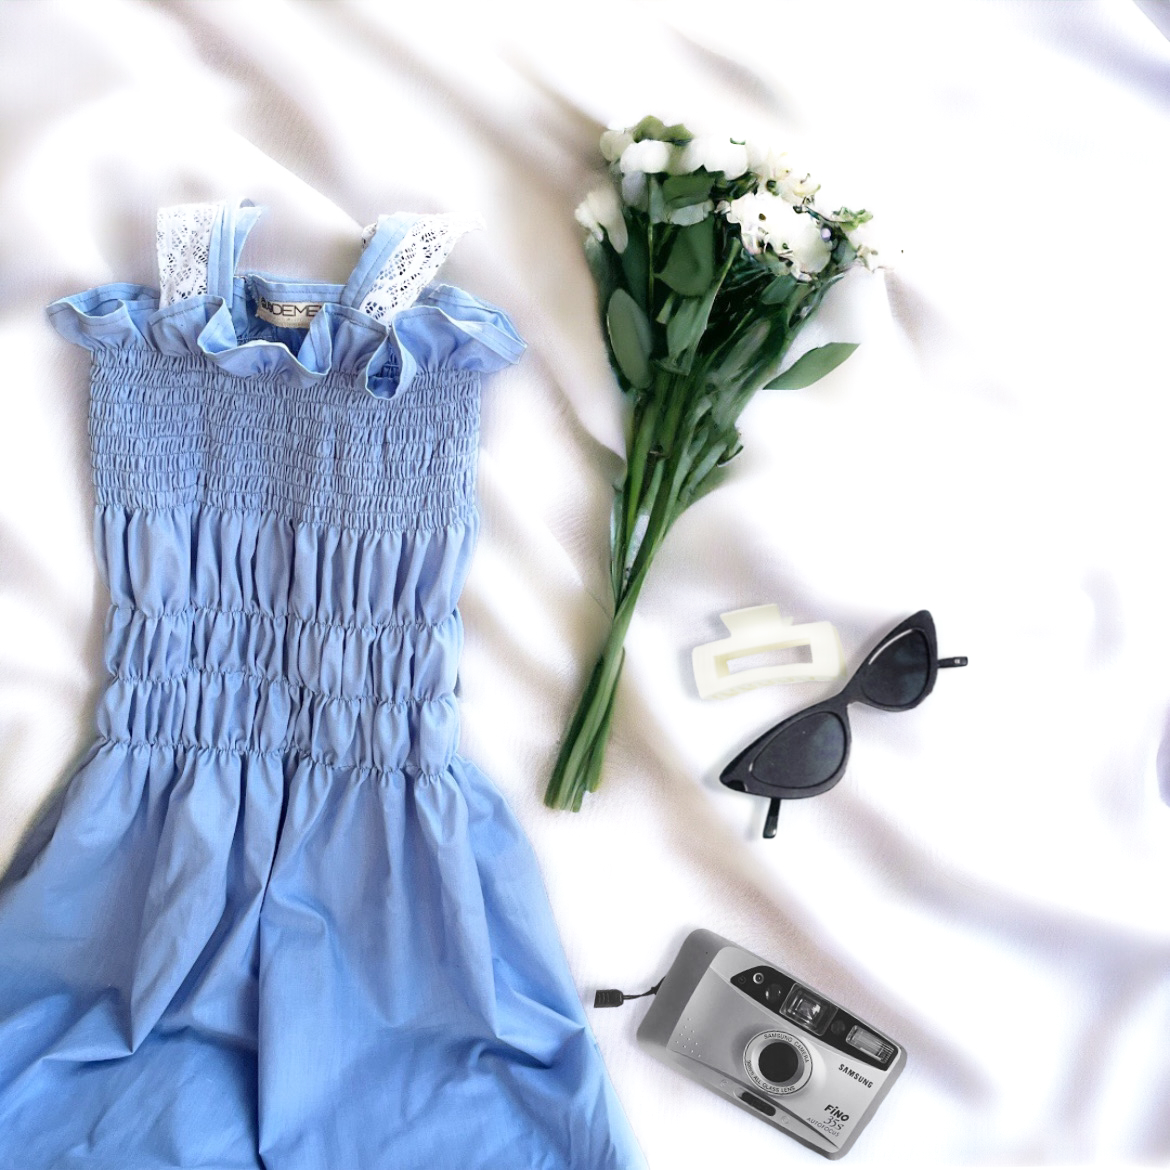 SOFT BLUE DRESS STYLE